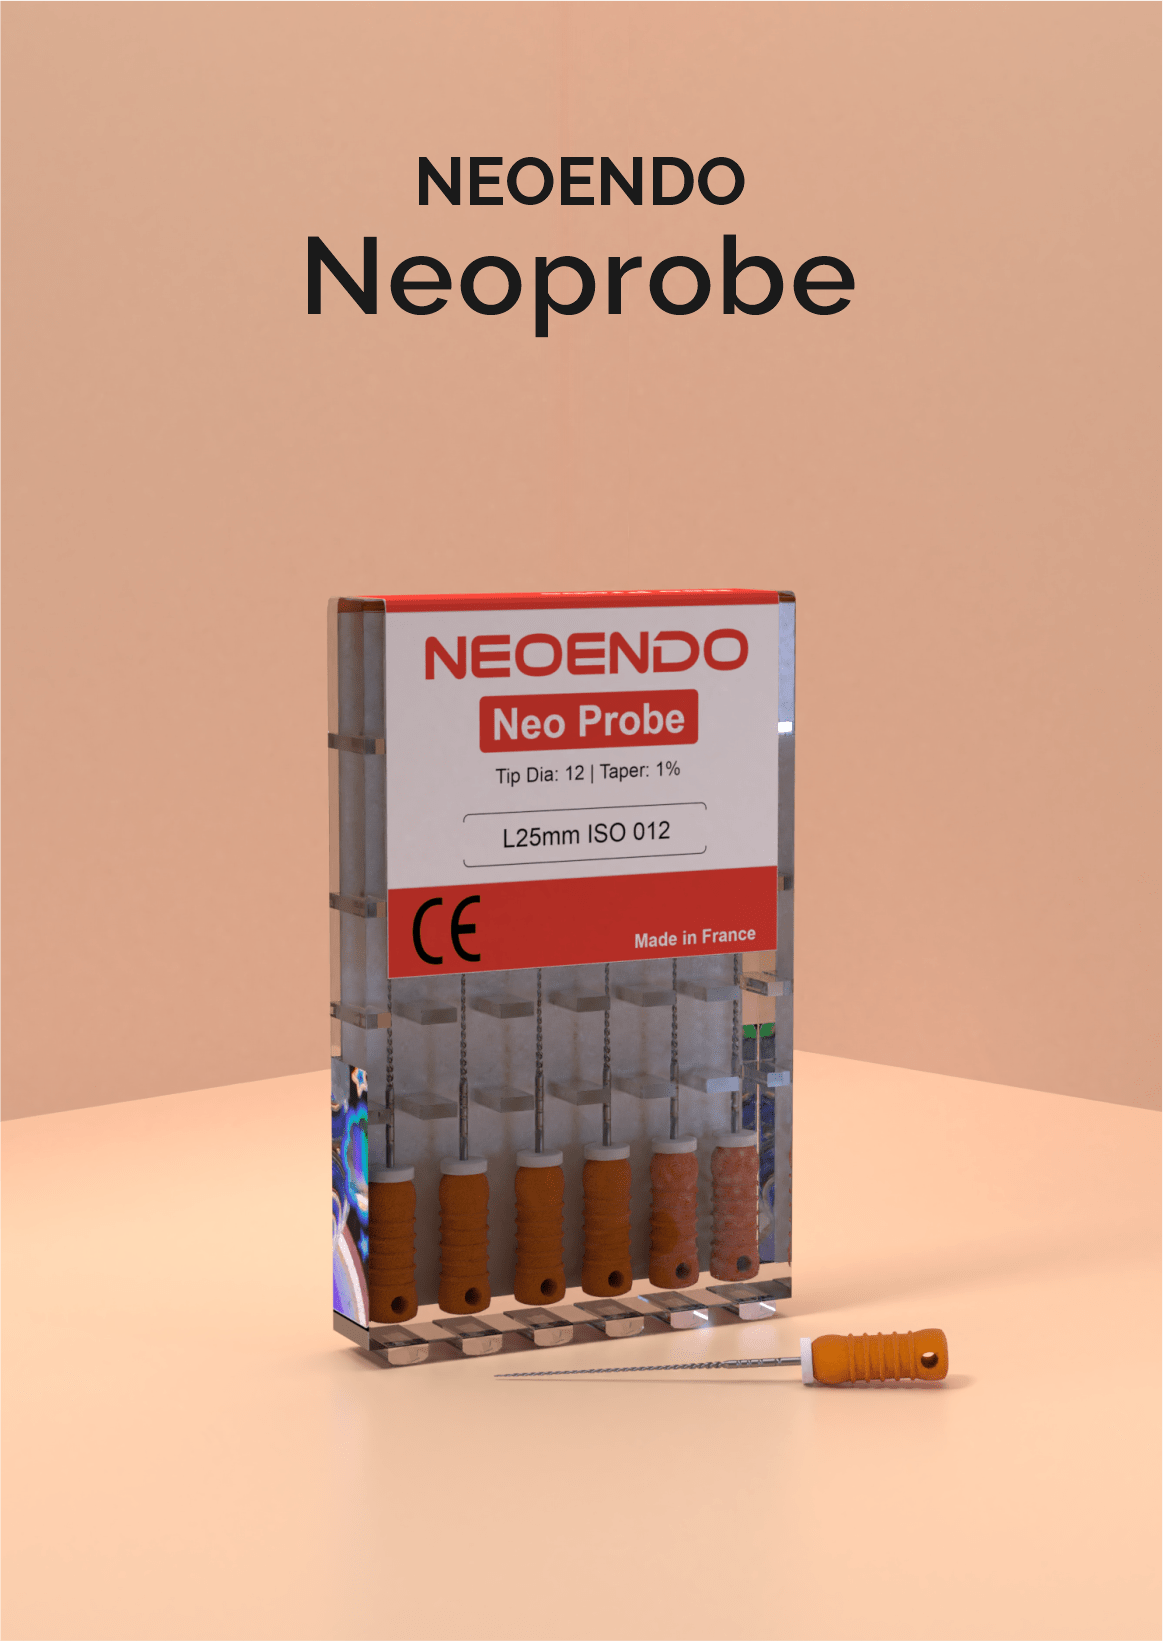 Neoendo Neoprobe Hand Files